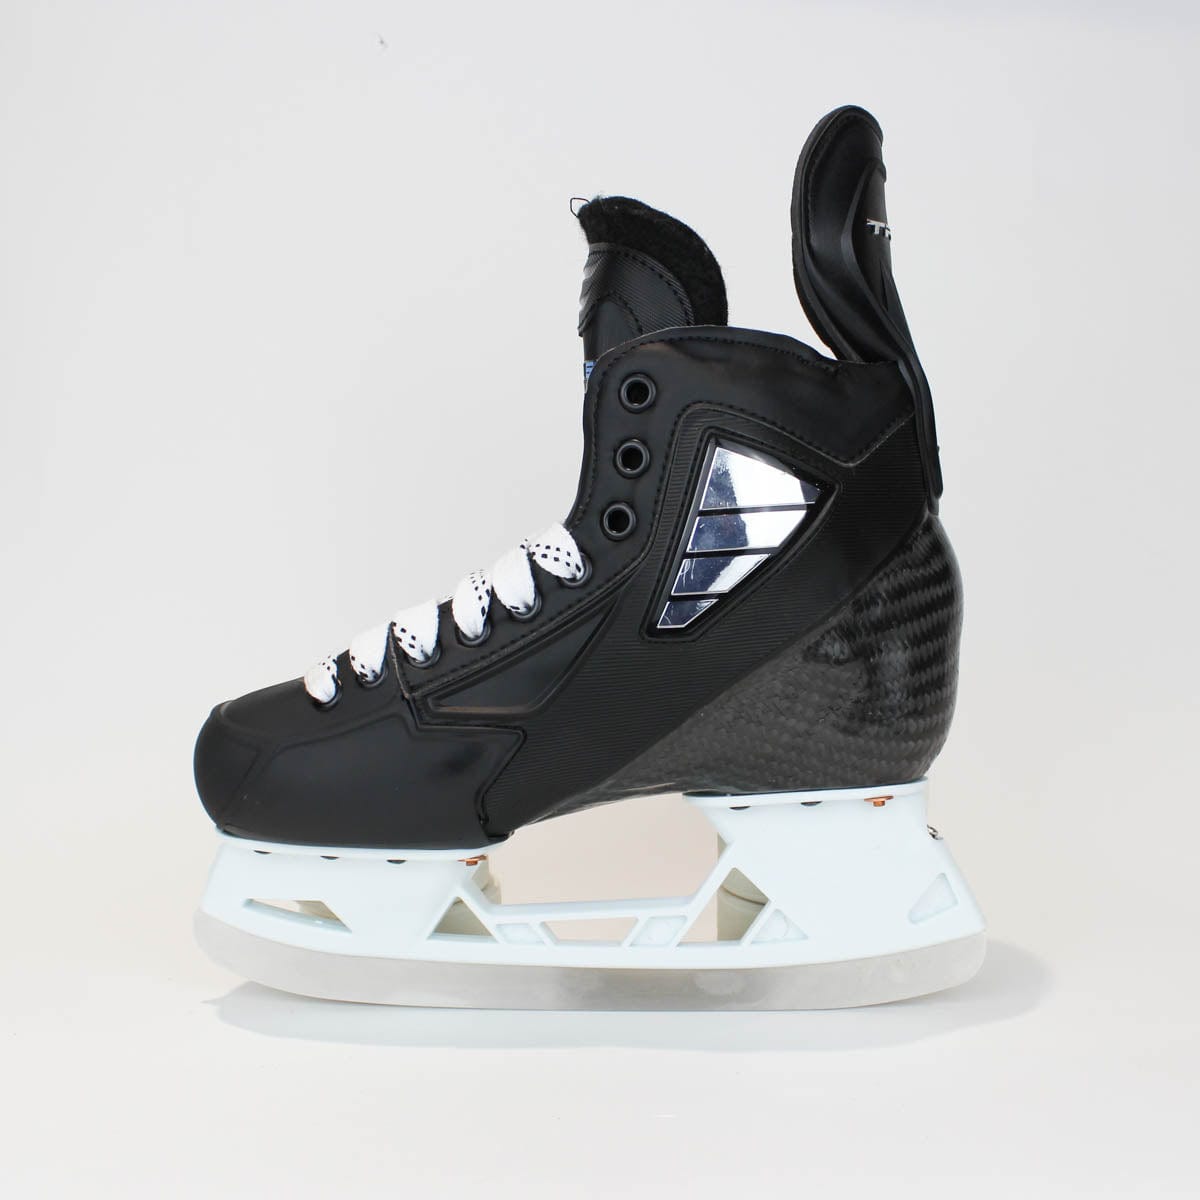 TRUE Player Junior Hockey Skates - Pro Stock - VH Holder - Size 4